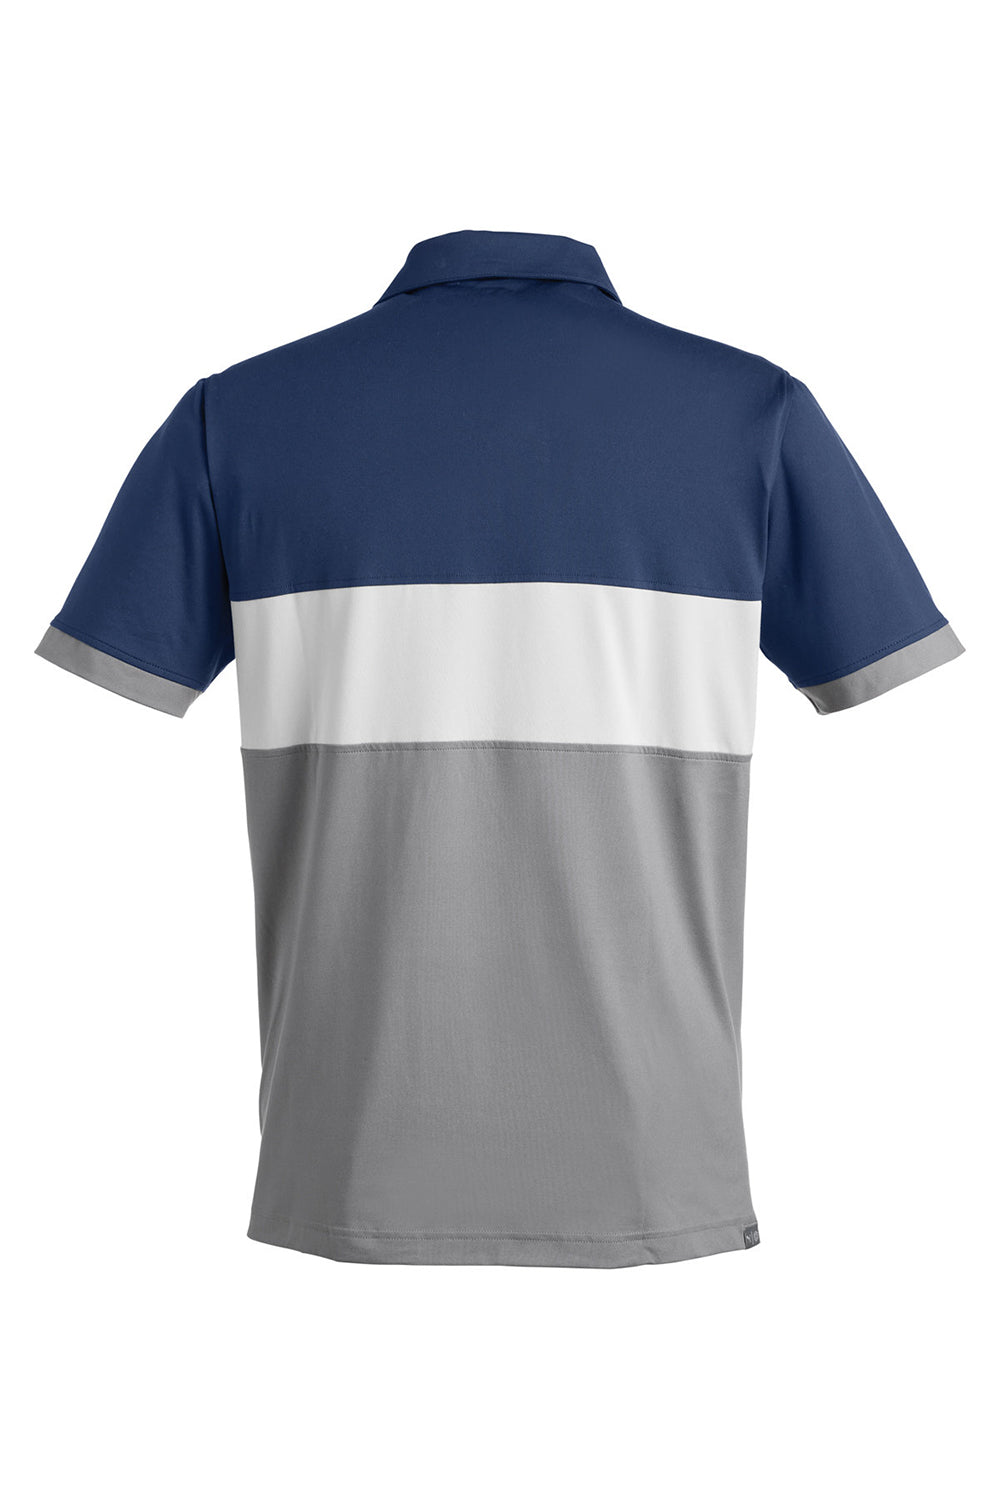 Puma 538930 Mens Cloudspun Highway Short Sleeve Polo Shirt Navy Blue Blazer Flat Back